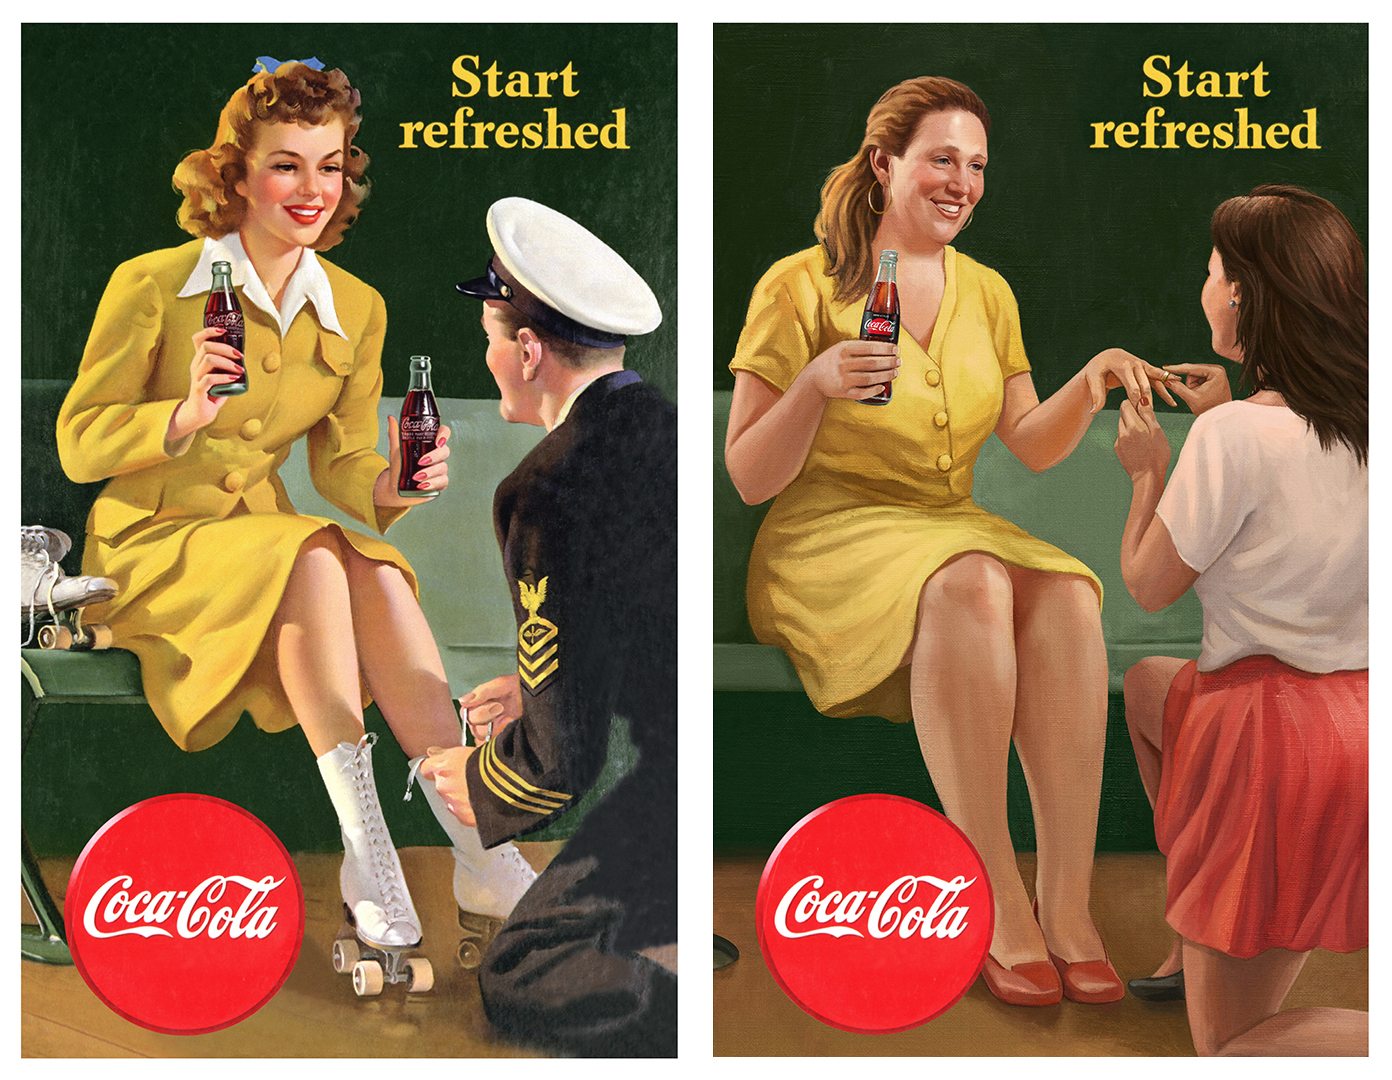 Posters Coca-Cola - Pedido.jpg